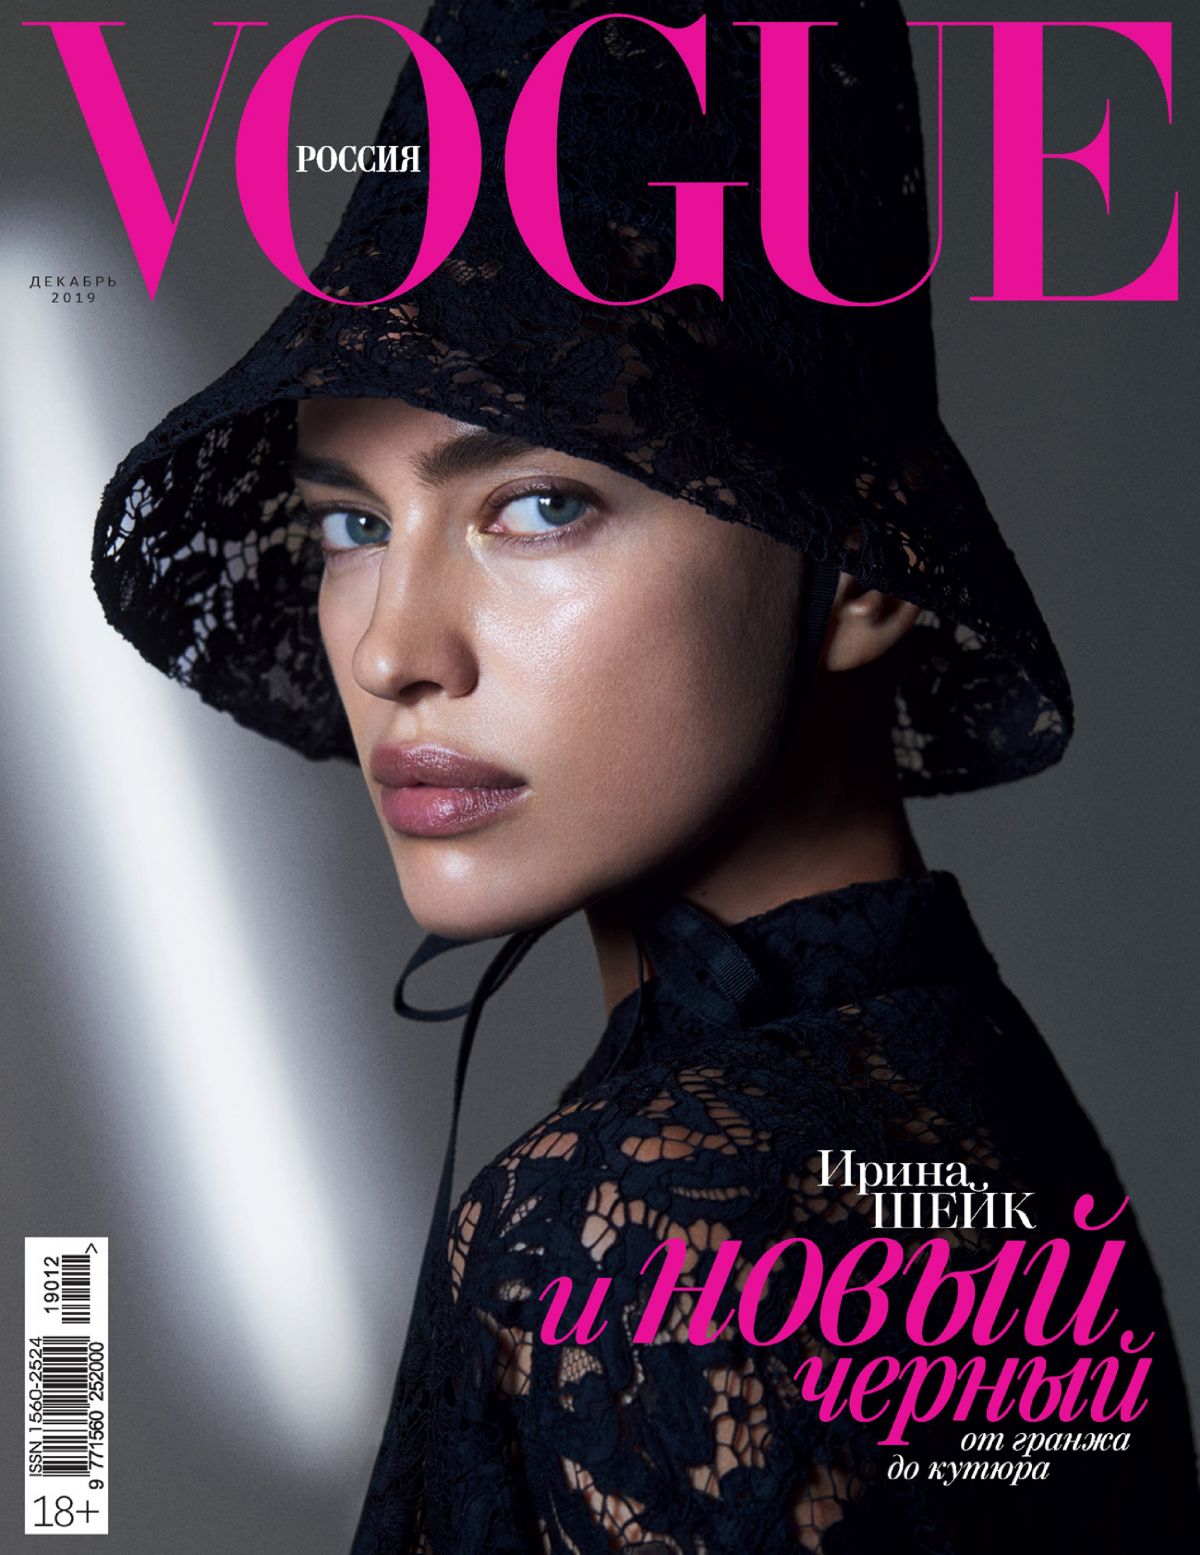 IRINA SHAYK and STELLA MAXWELL in Vogue Magazine, Russia December 2019 ...